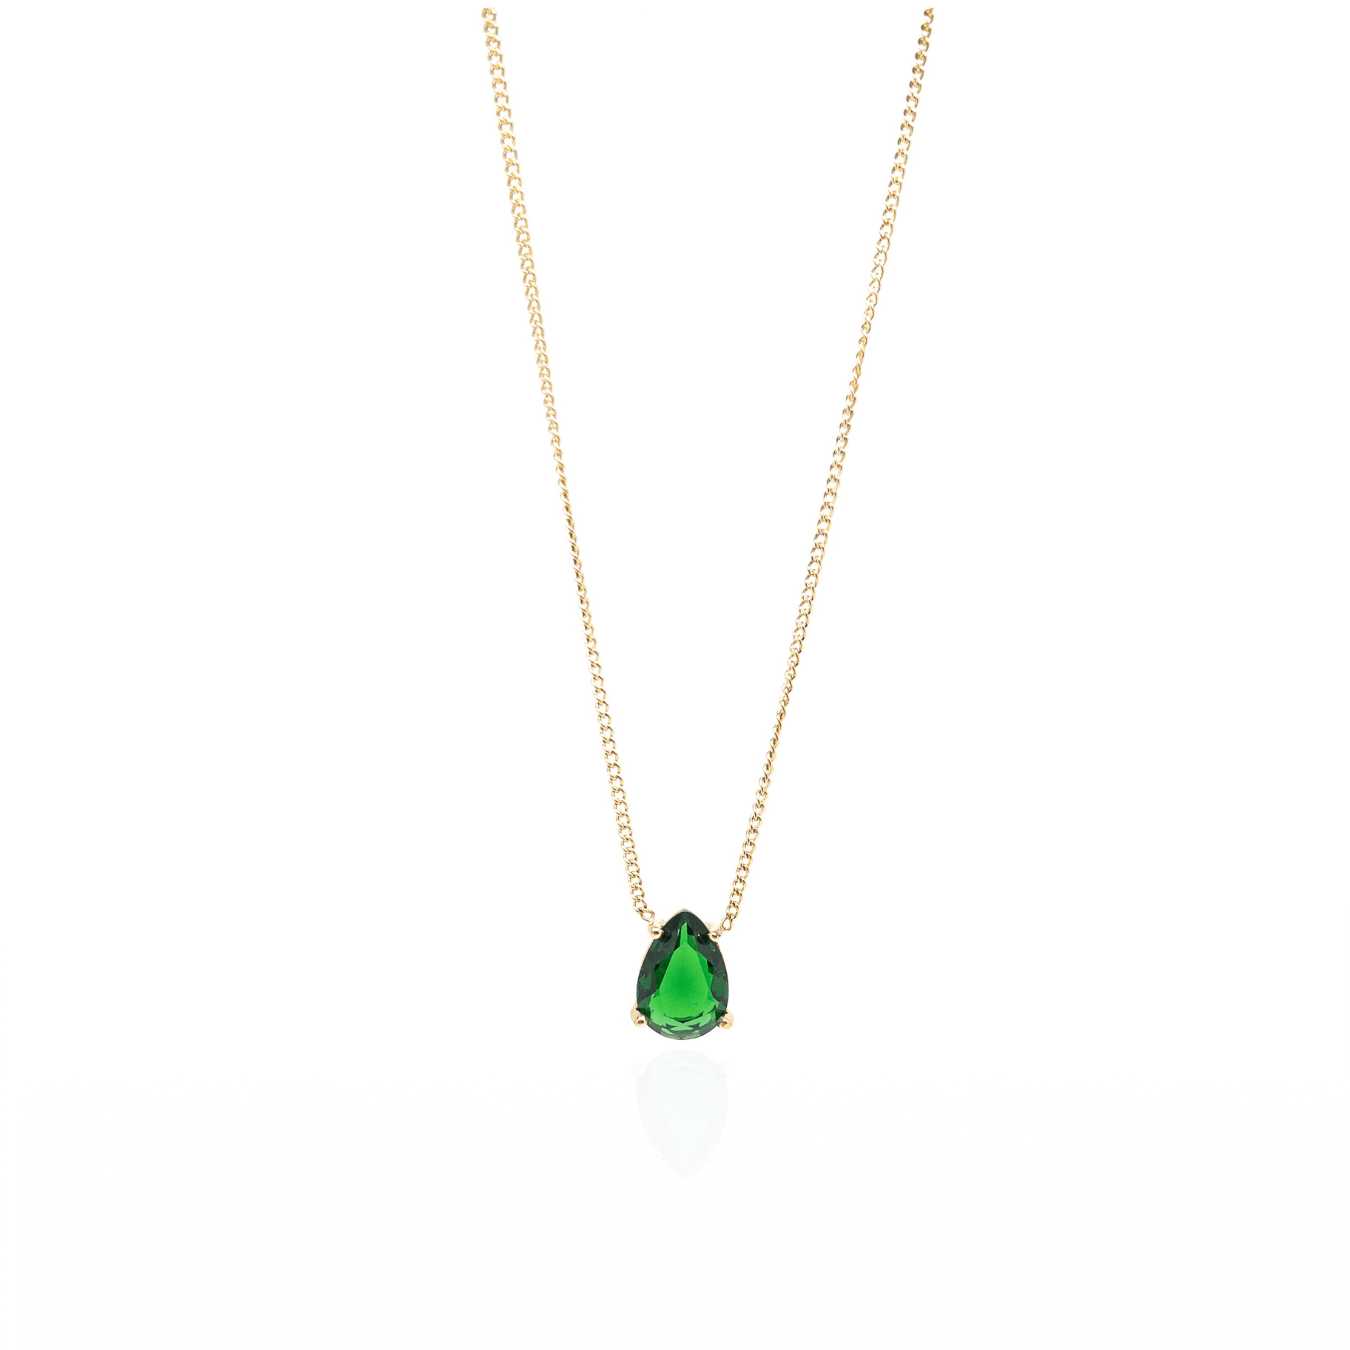 The Green Zircon Necklace